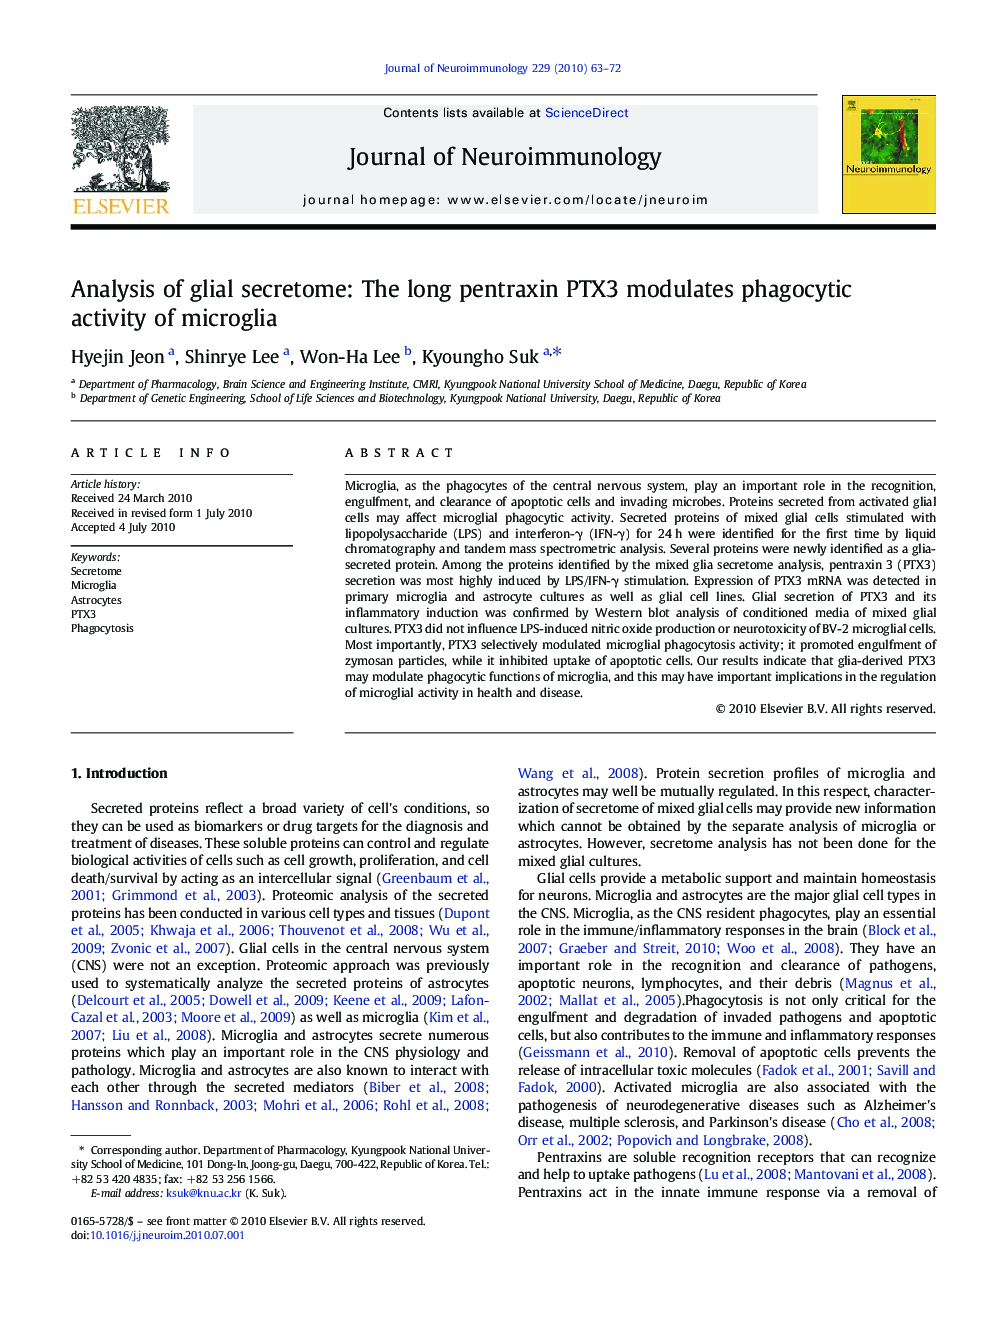 Analysis of glial secretome: The long pentraxin PTX3 modulates phagocytic activity of microglia